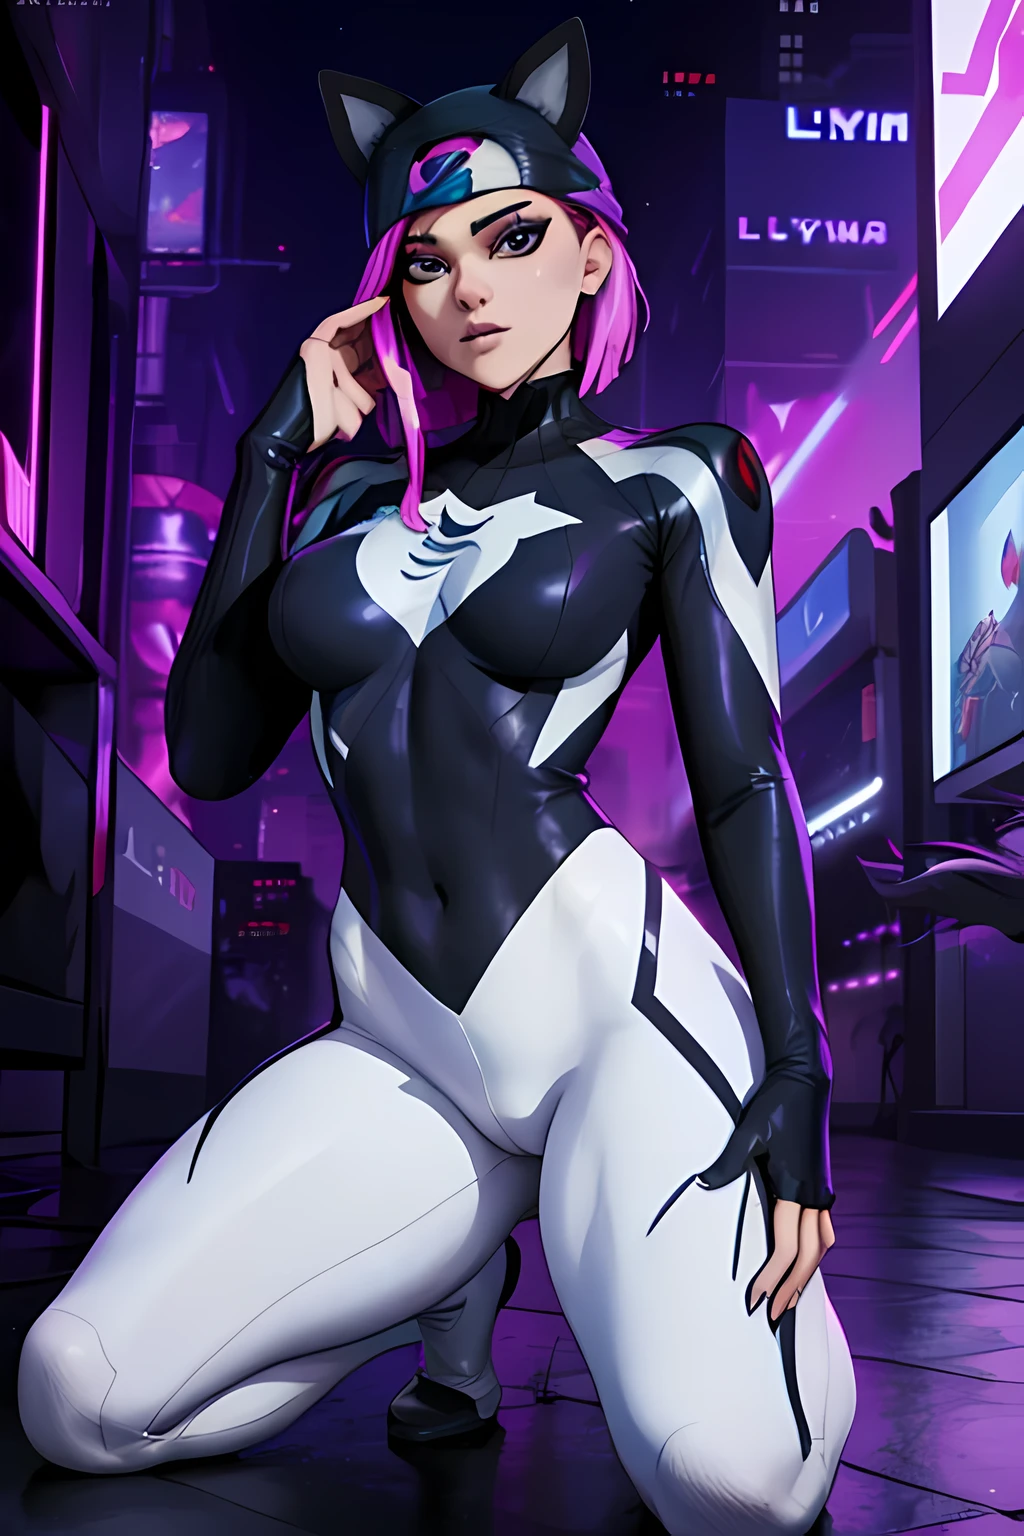  lynx spider costume Gwen, face mask,  black and white, black leggings, heroic pose , cyberpunk, evening